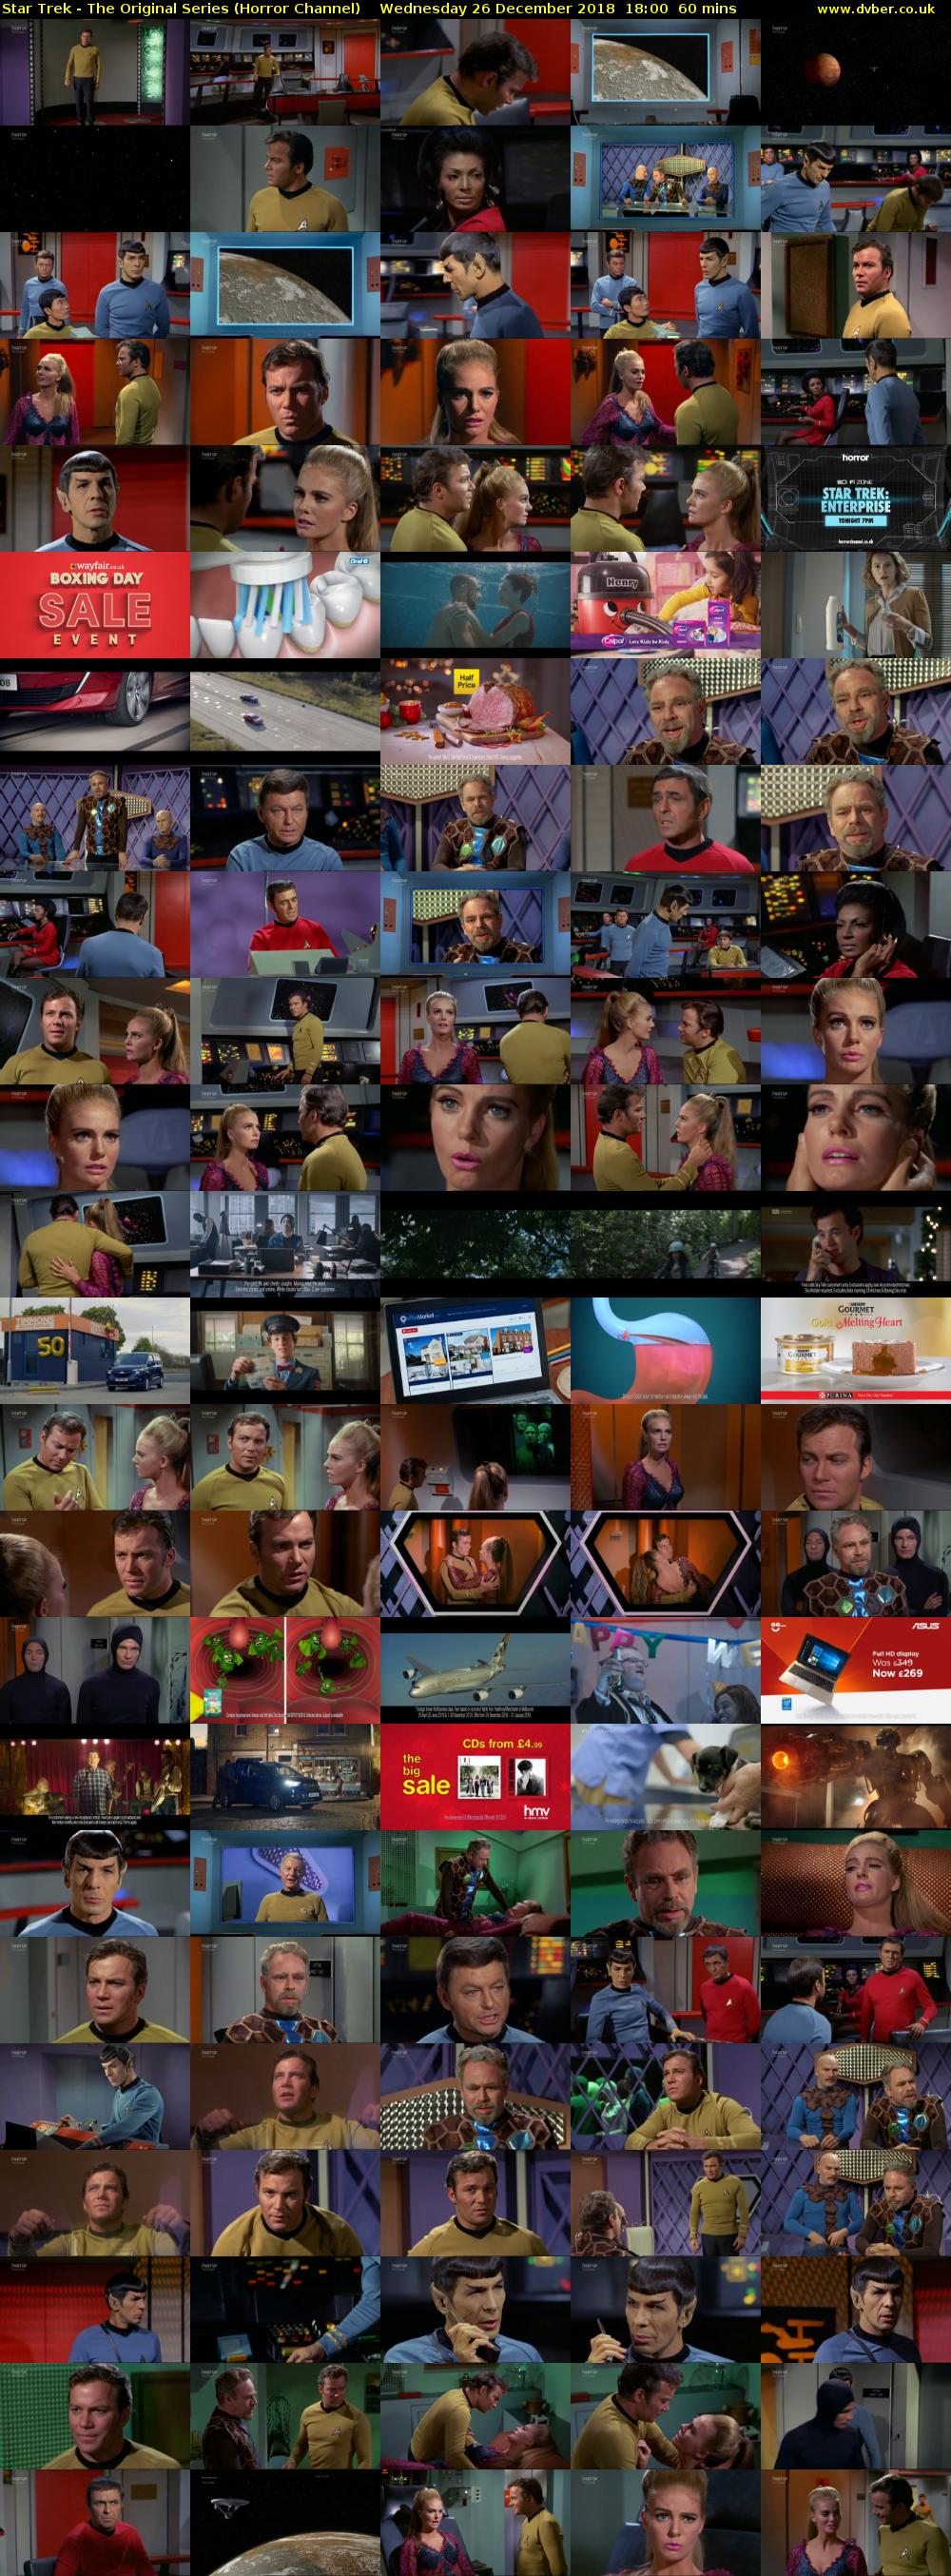 Star Trek - The Original Series (Horror Channel) Wednesday 26 December 2018 18:00 - 19:00